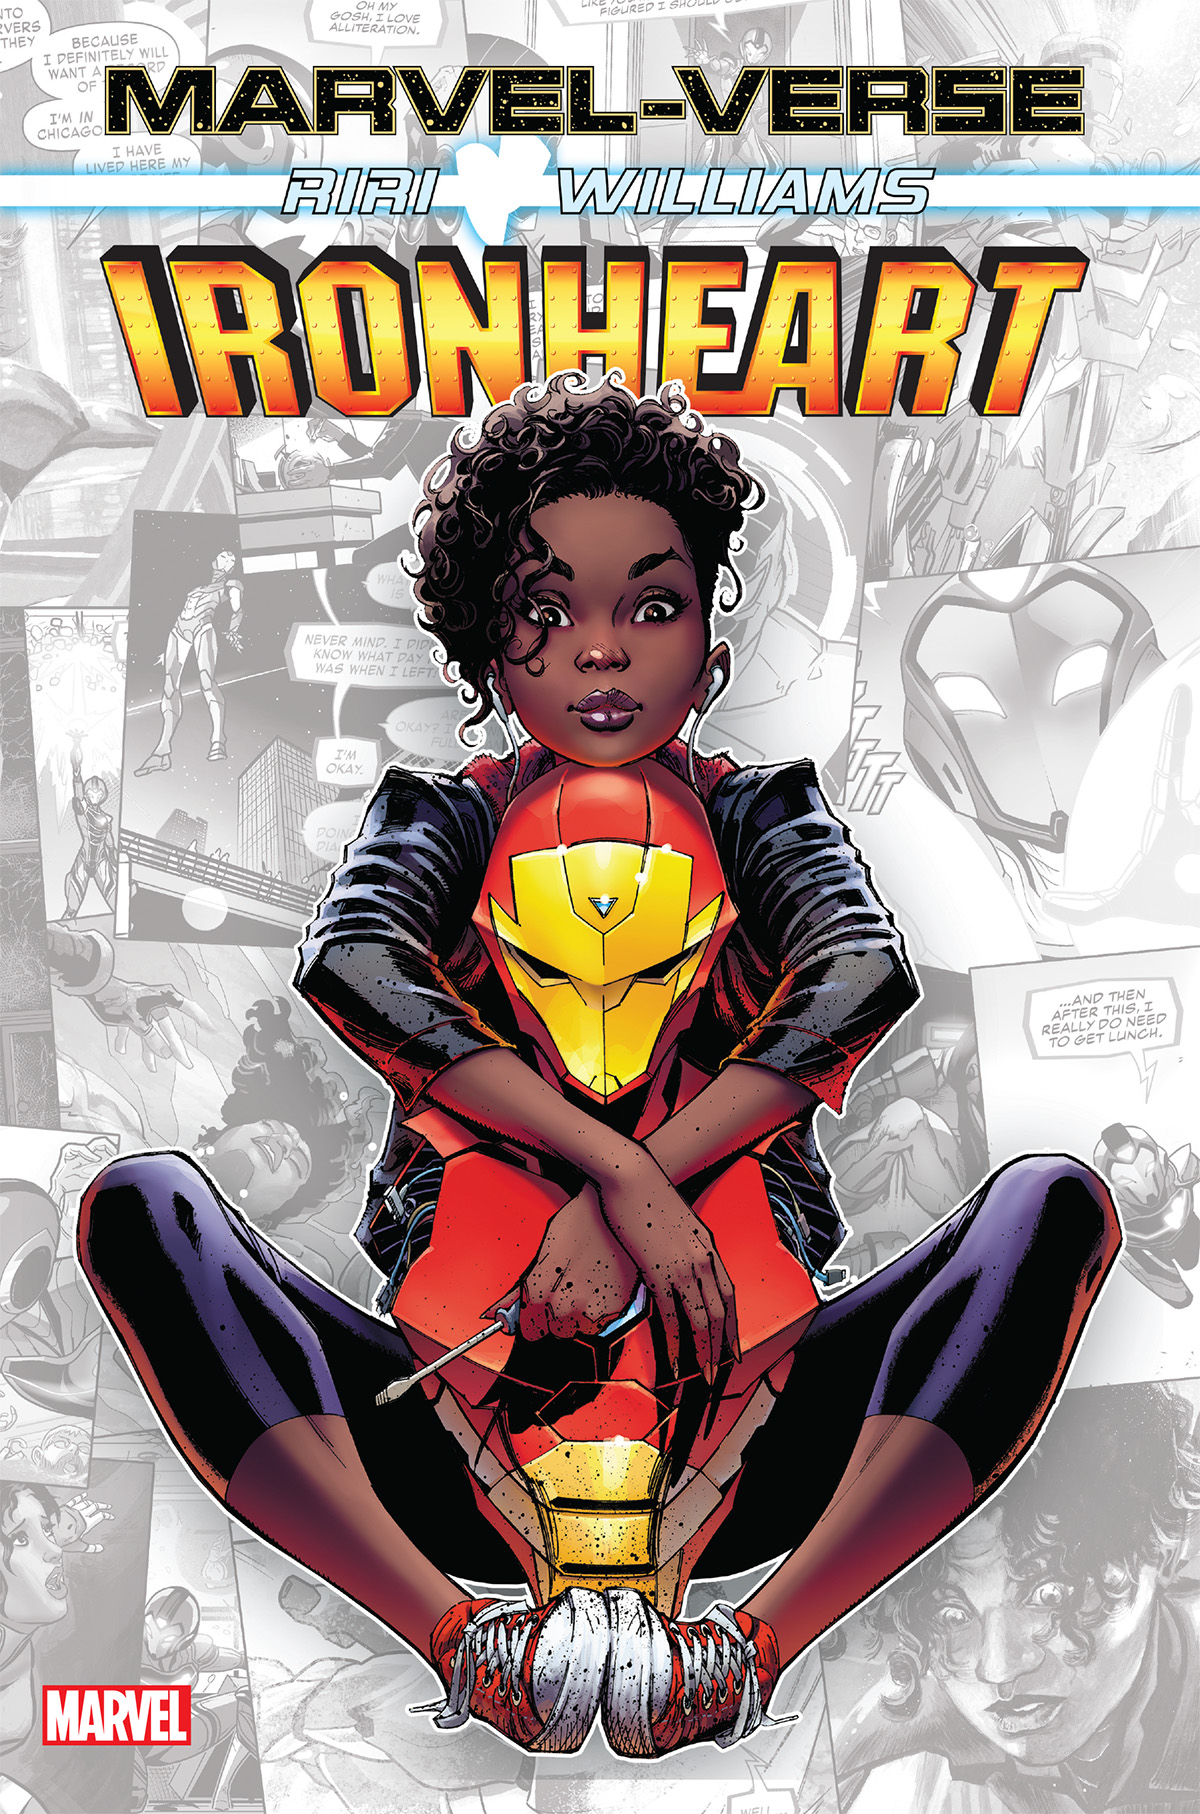 Marvel-Verse: Ironheart (Trade Paperback)